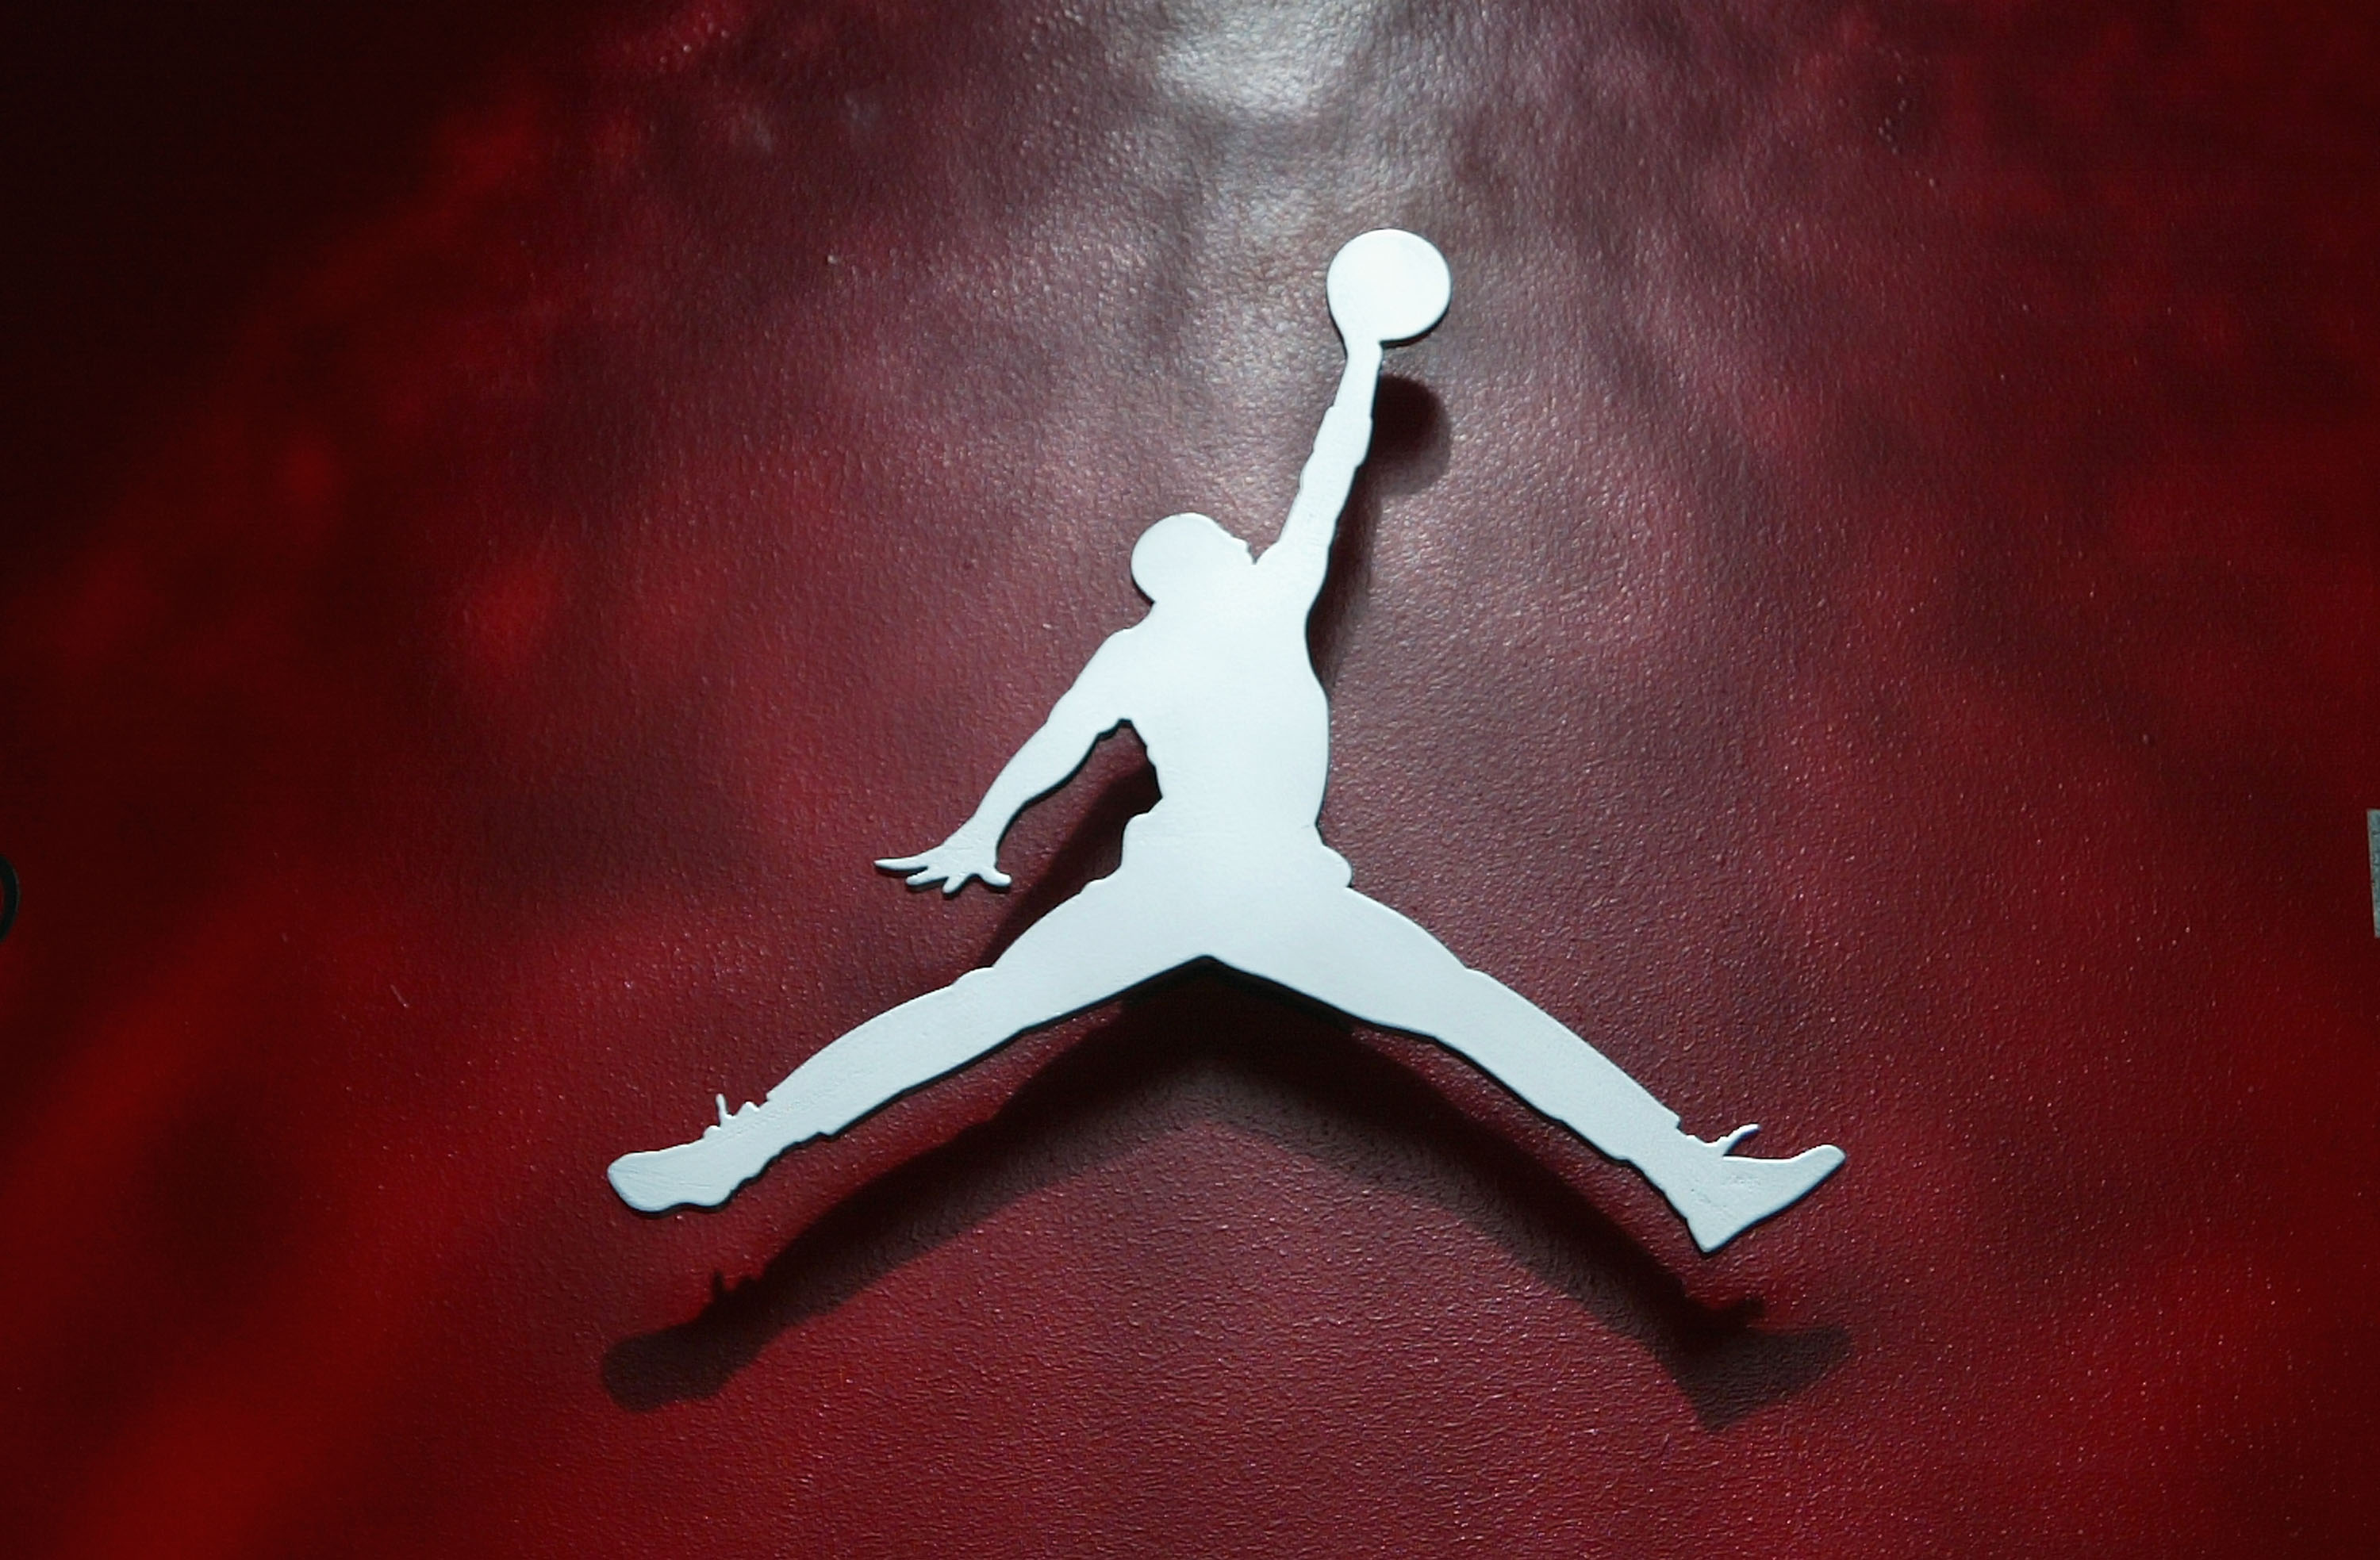 Air Jordan 4 “Bred Reimagined” Gets Crucial Update